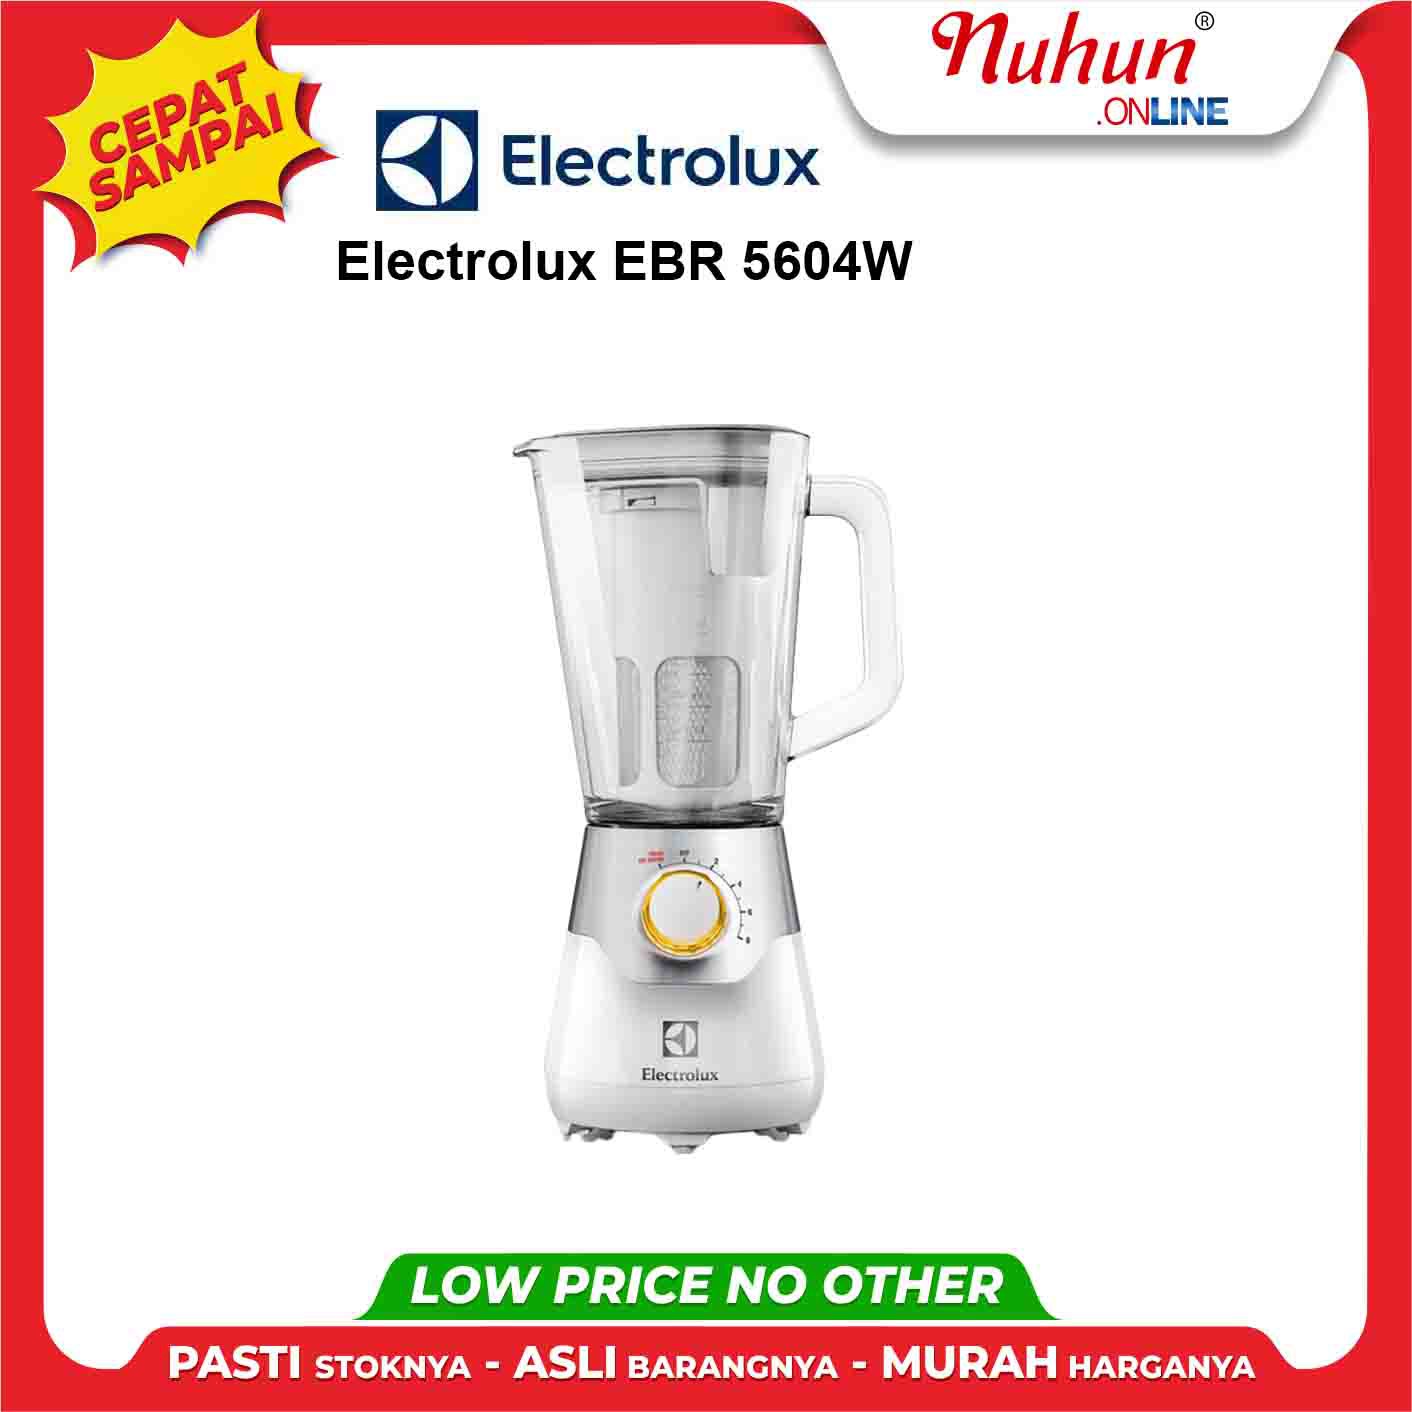 Electrolux EBR 5604W